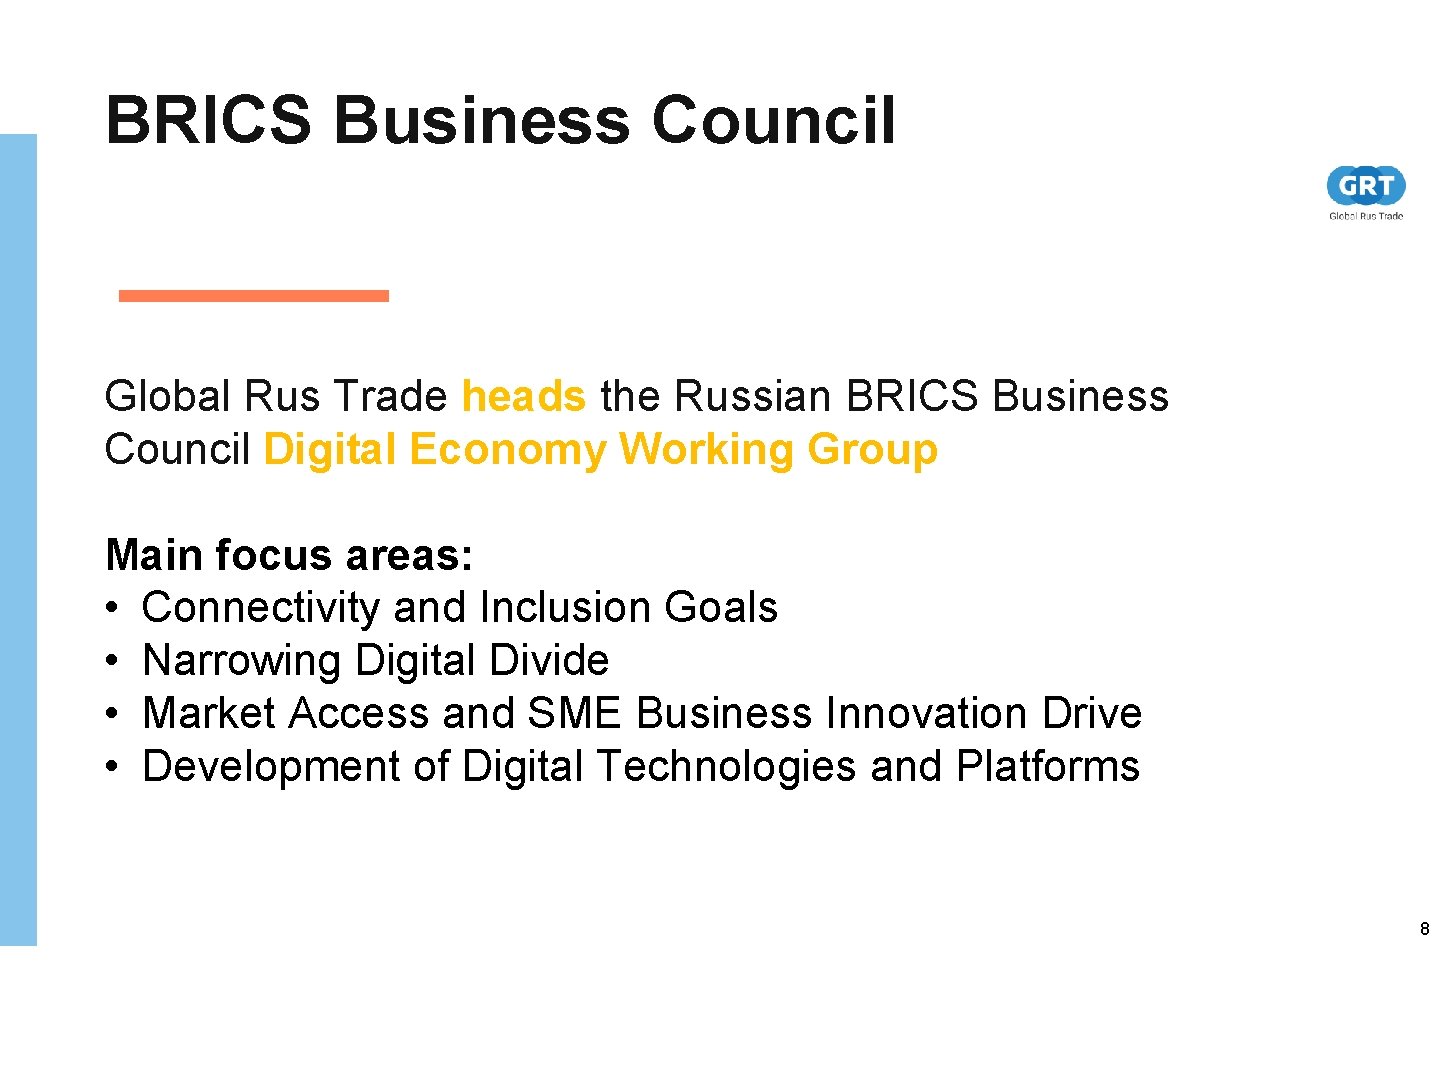 BRICS Business Council Global Rus Trade heads the Russian BRICS Business Council Digital Economy